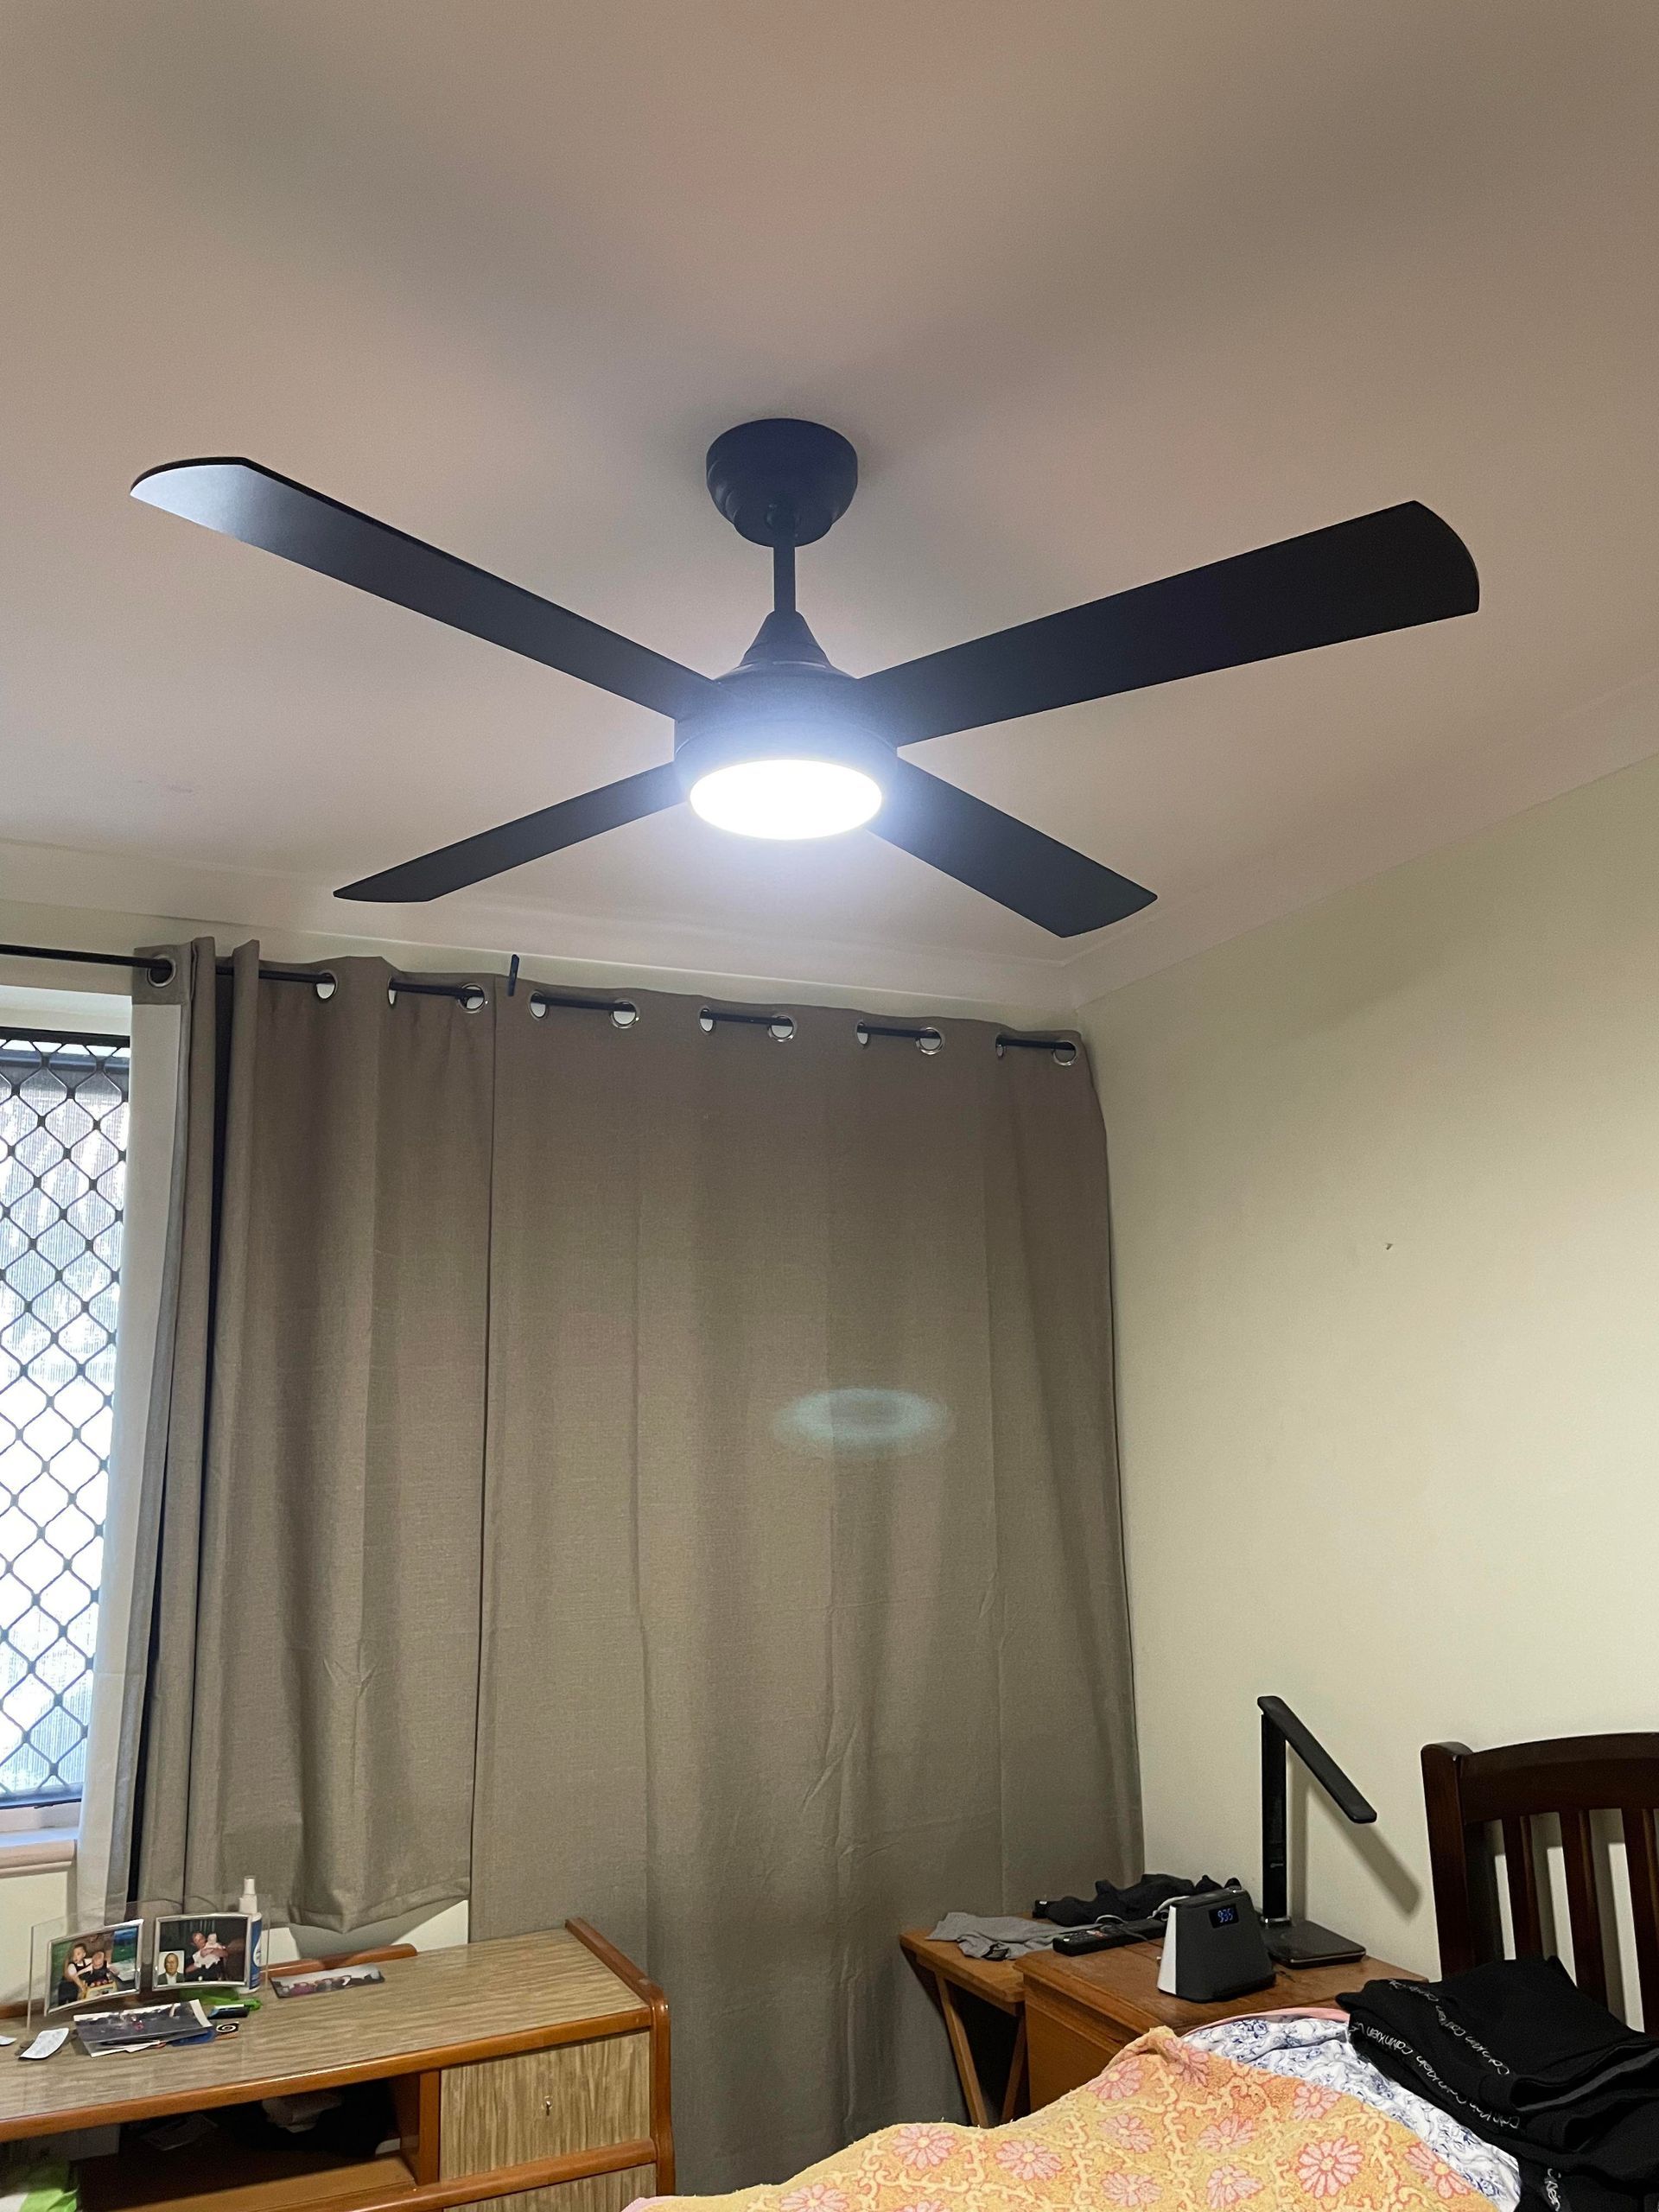 Ceiling Fan Installation in Bedroom of home